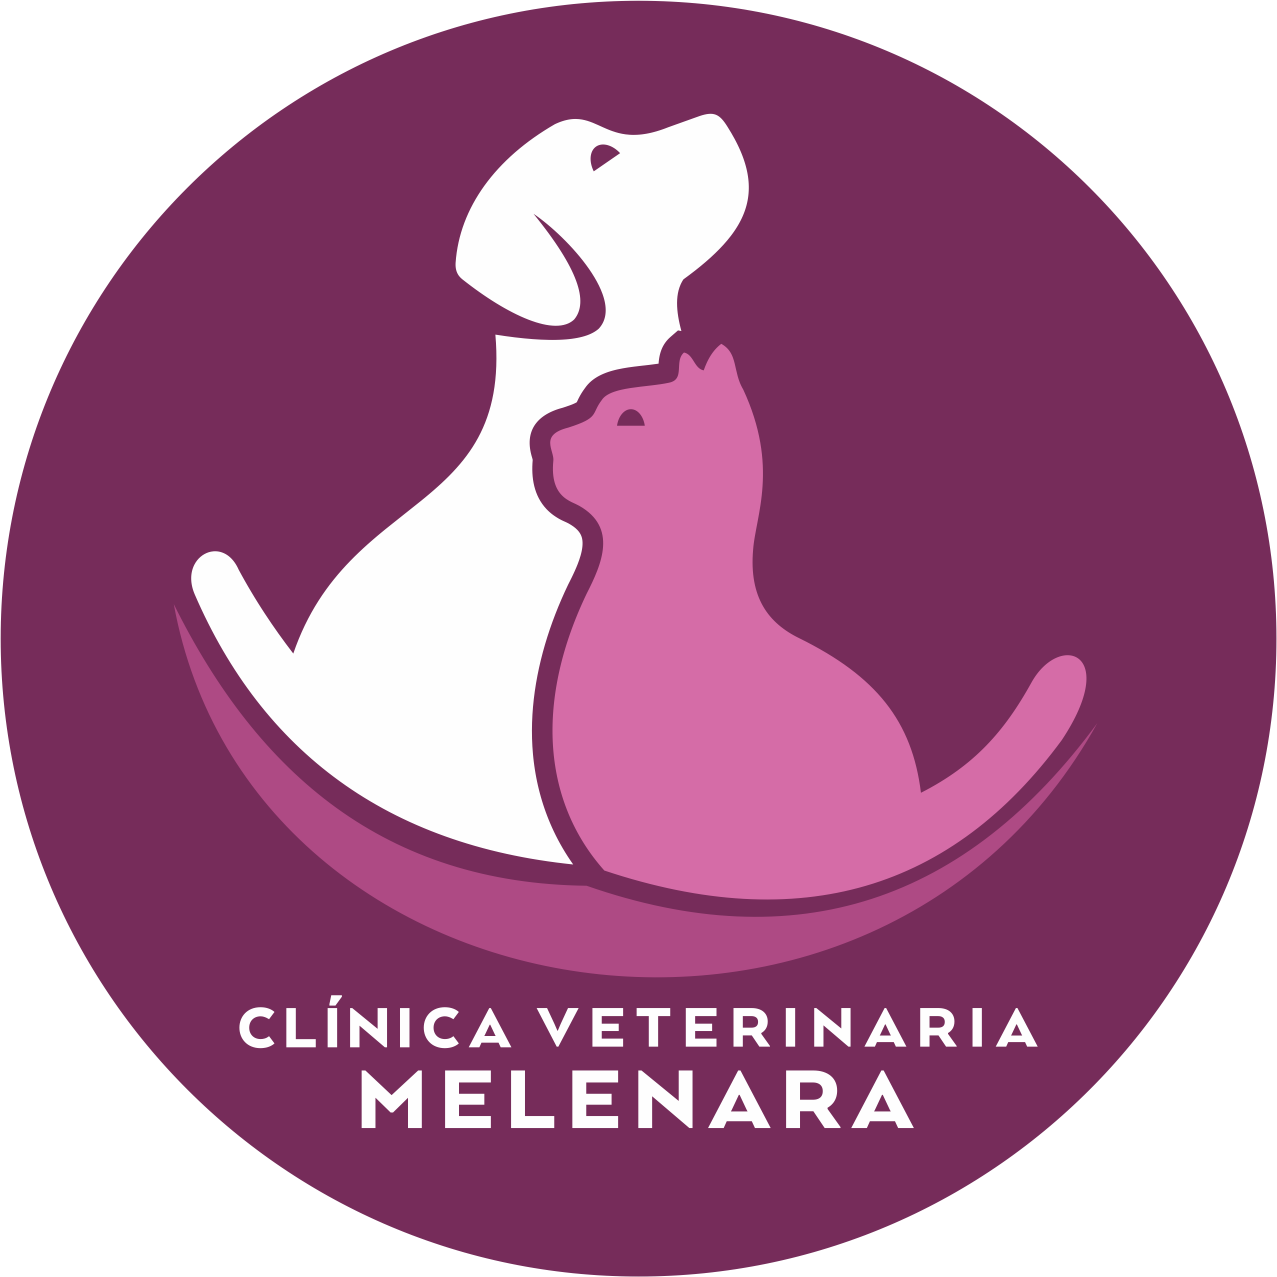 Clínica Veterinaria Melenara